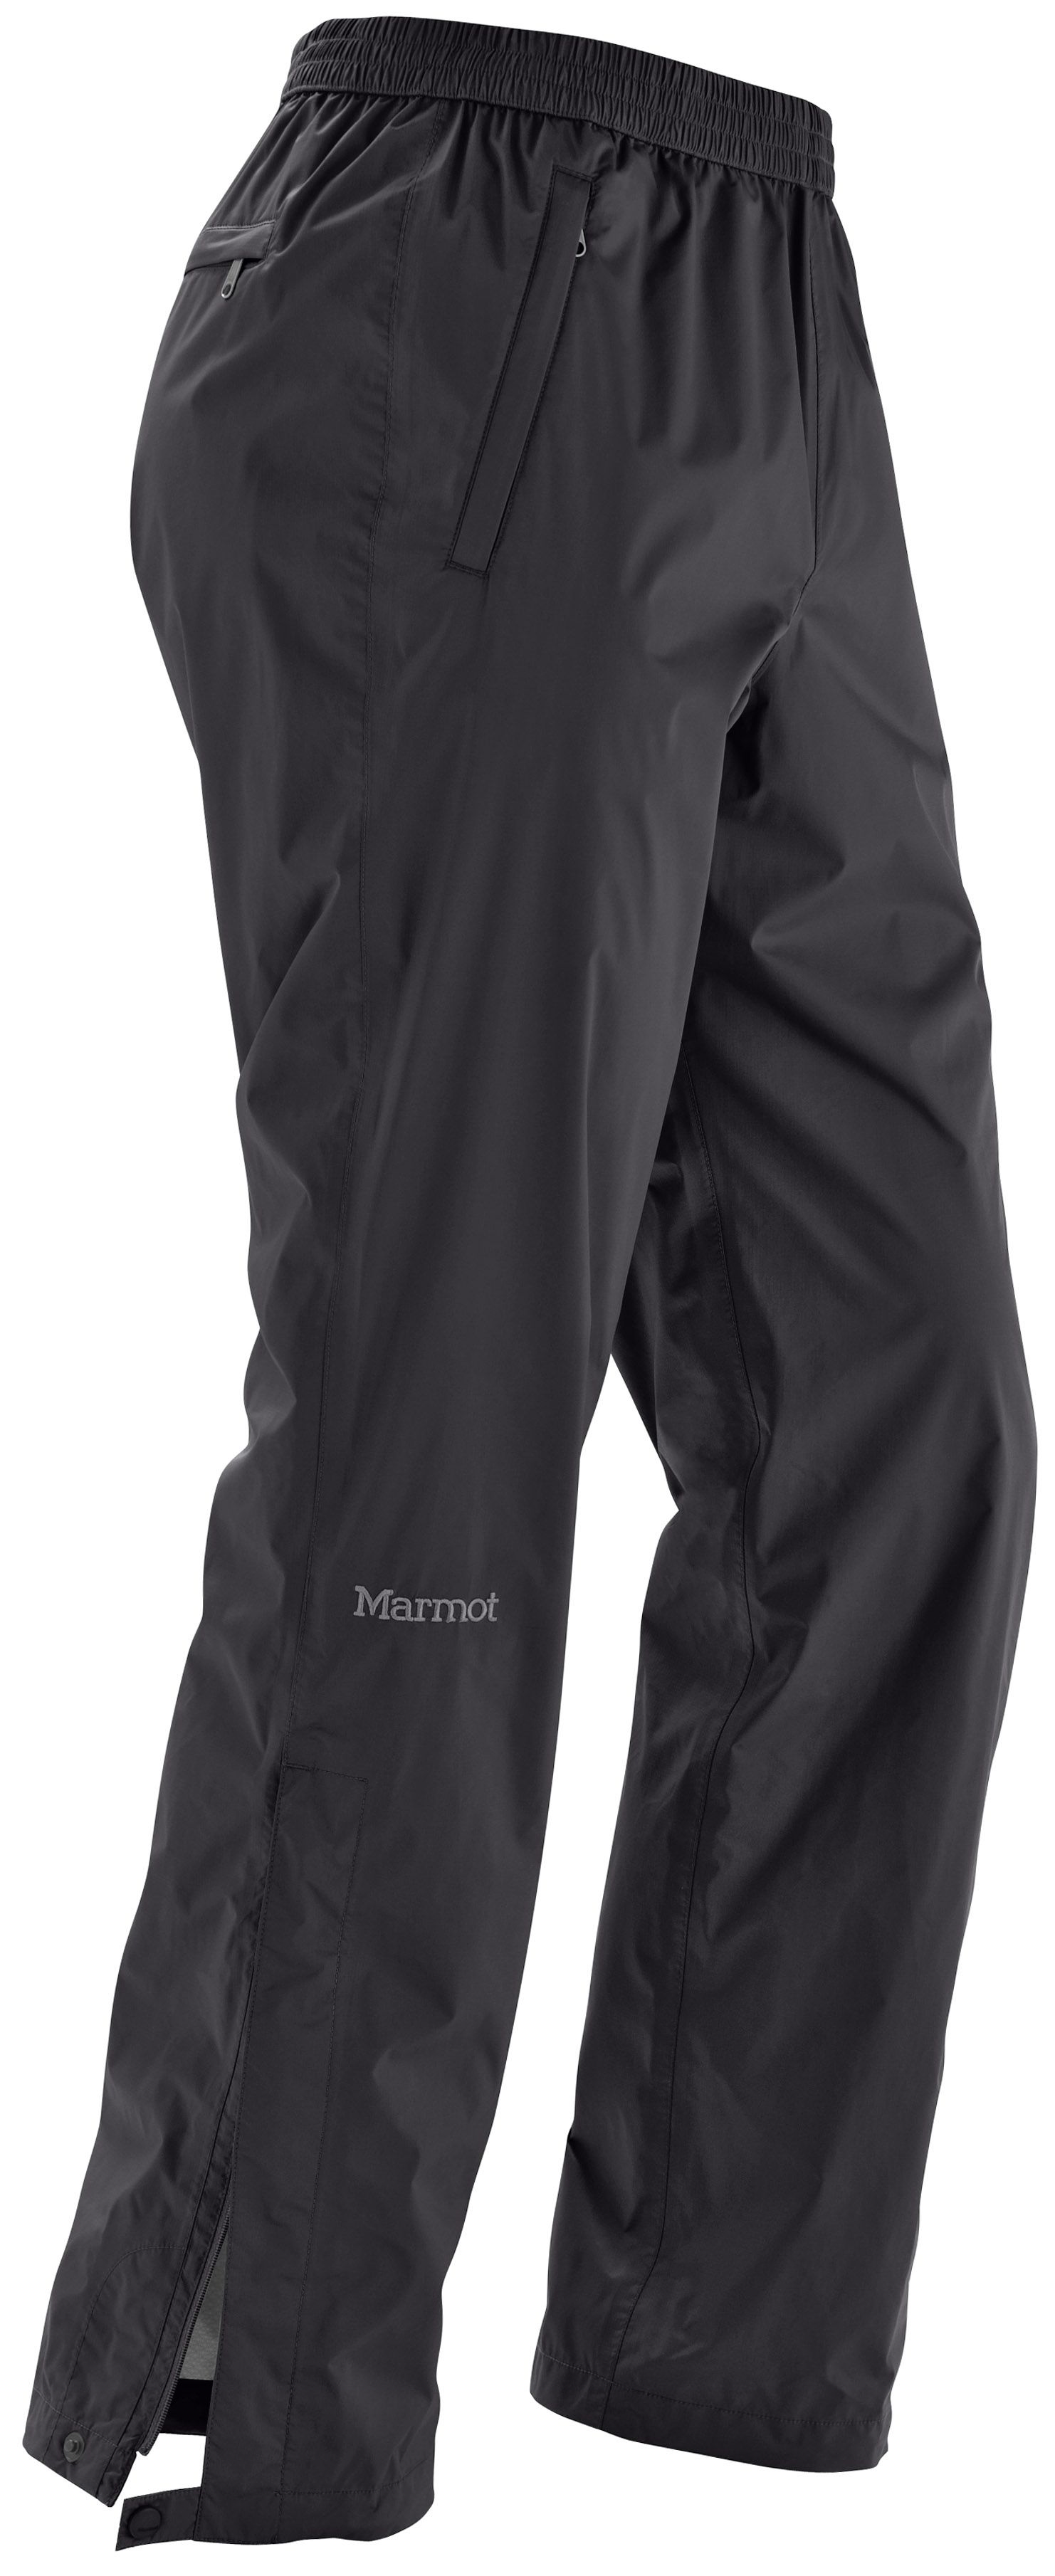 Marmot Men's Precip Pants - Black, S